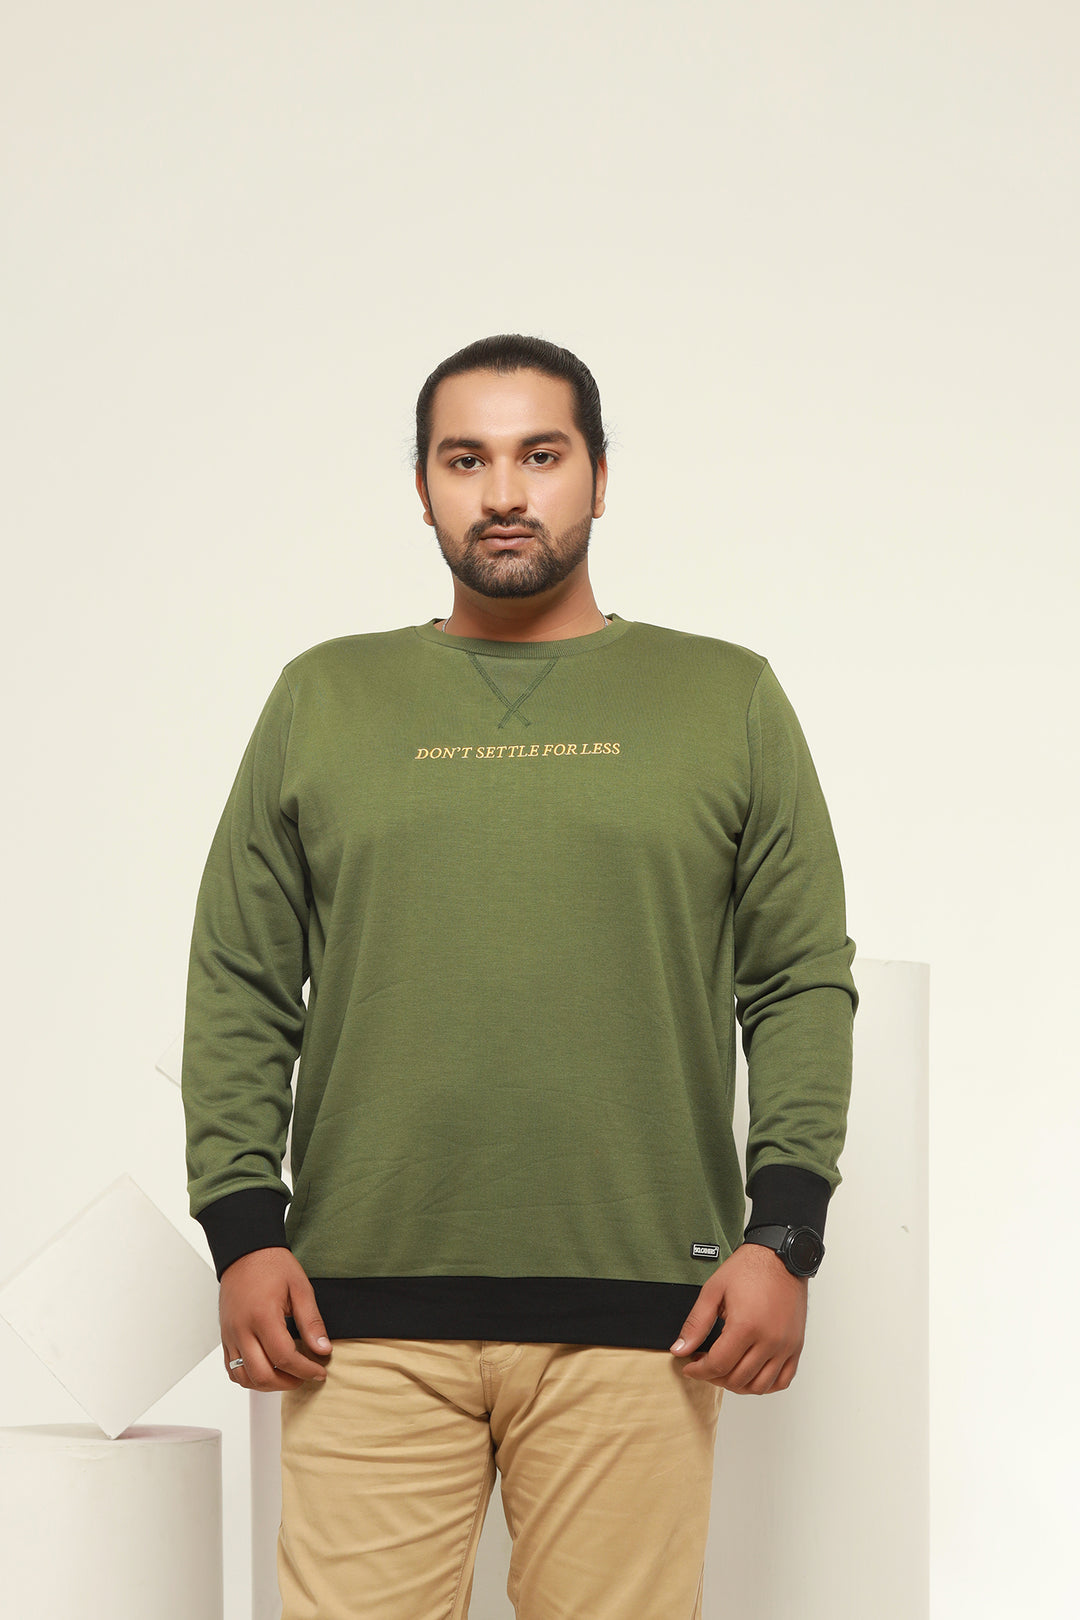 Plus Size Embroidery Sweatshirts in Pakistan